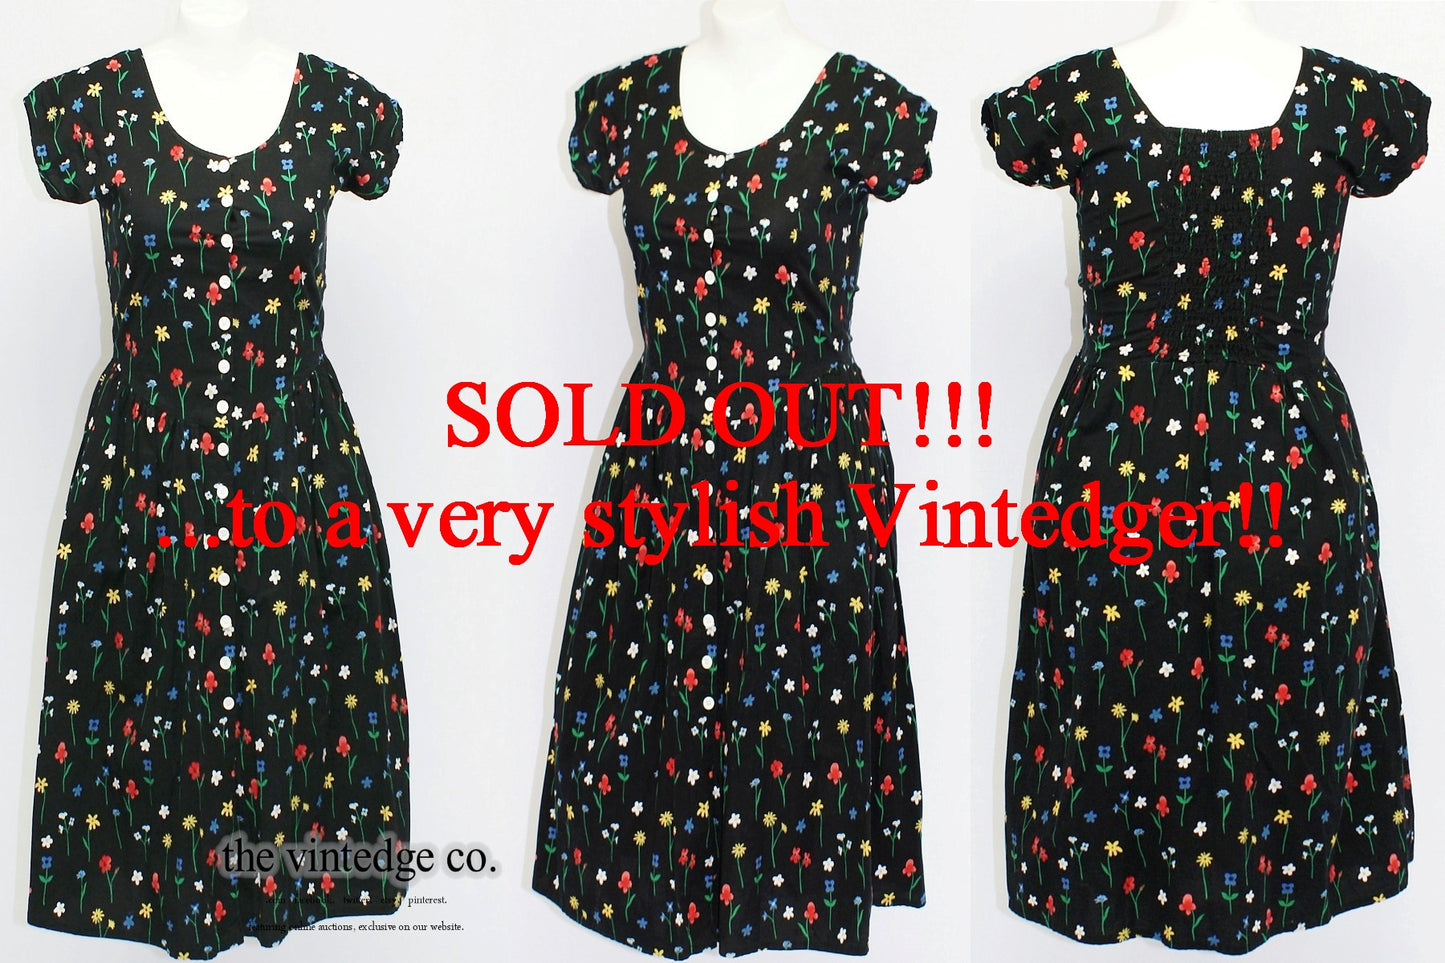 SOLD - 1980's Floral Dress The Vintedge Co.